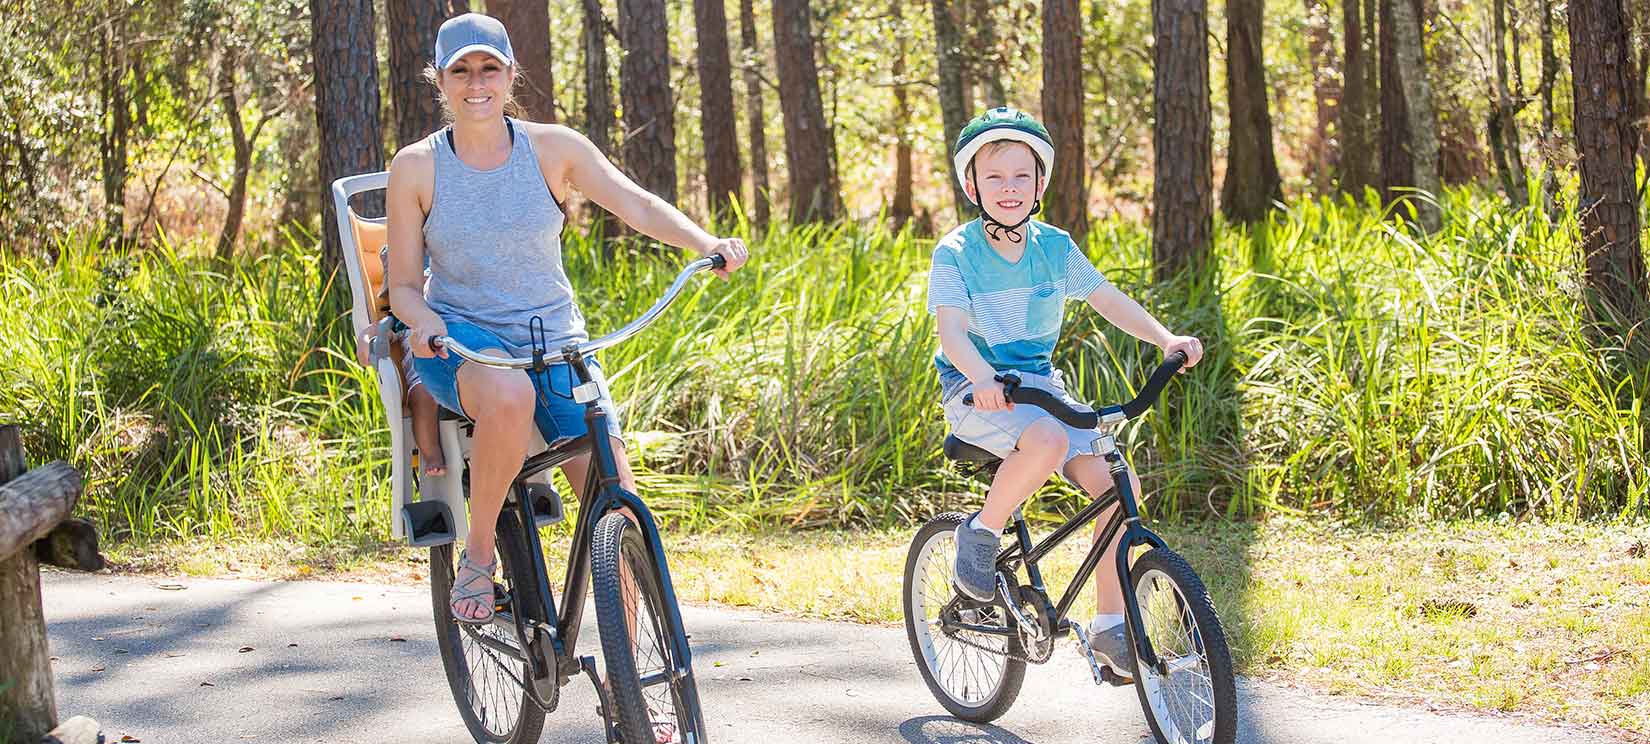 Family-Biking-Trail-System-Nexus-Tennessee.jpg